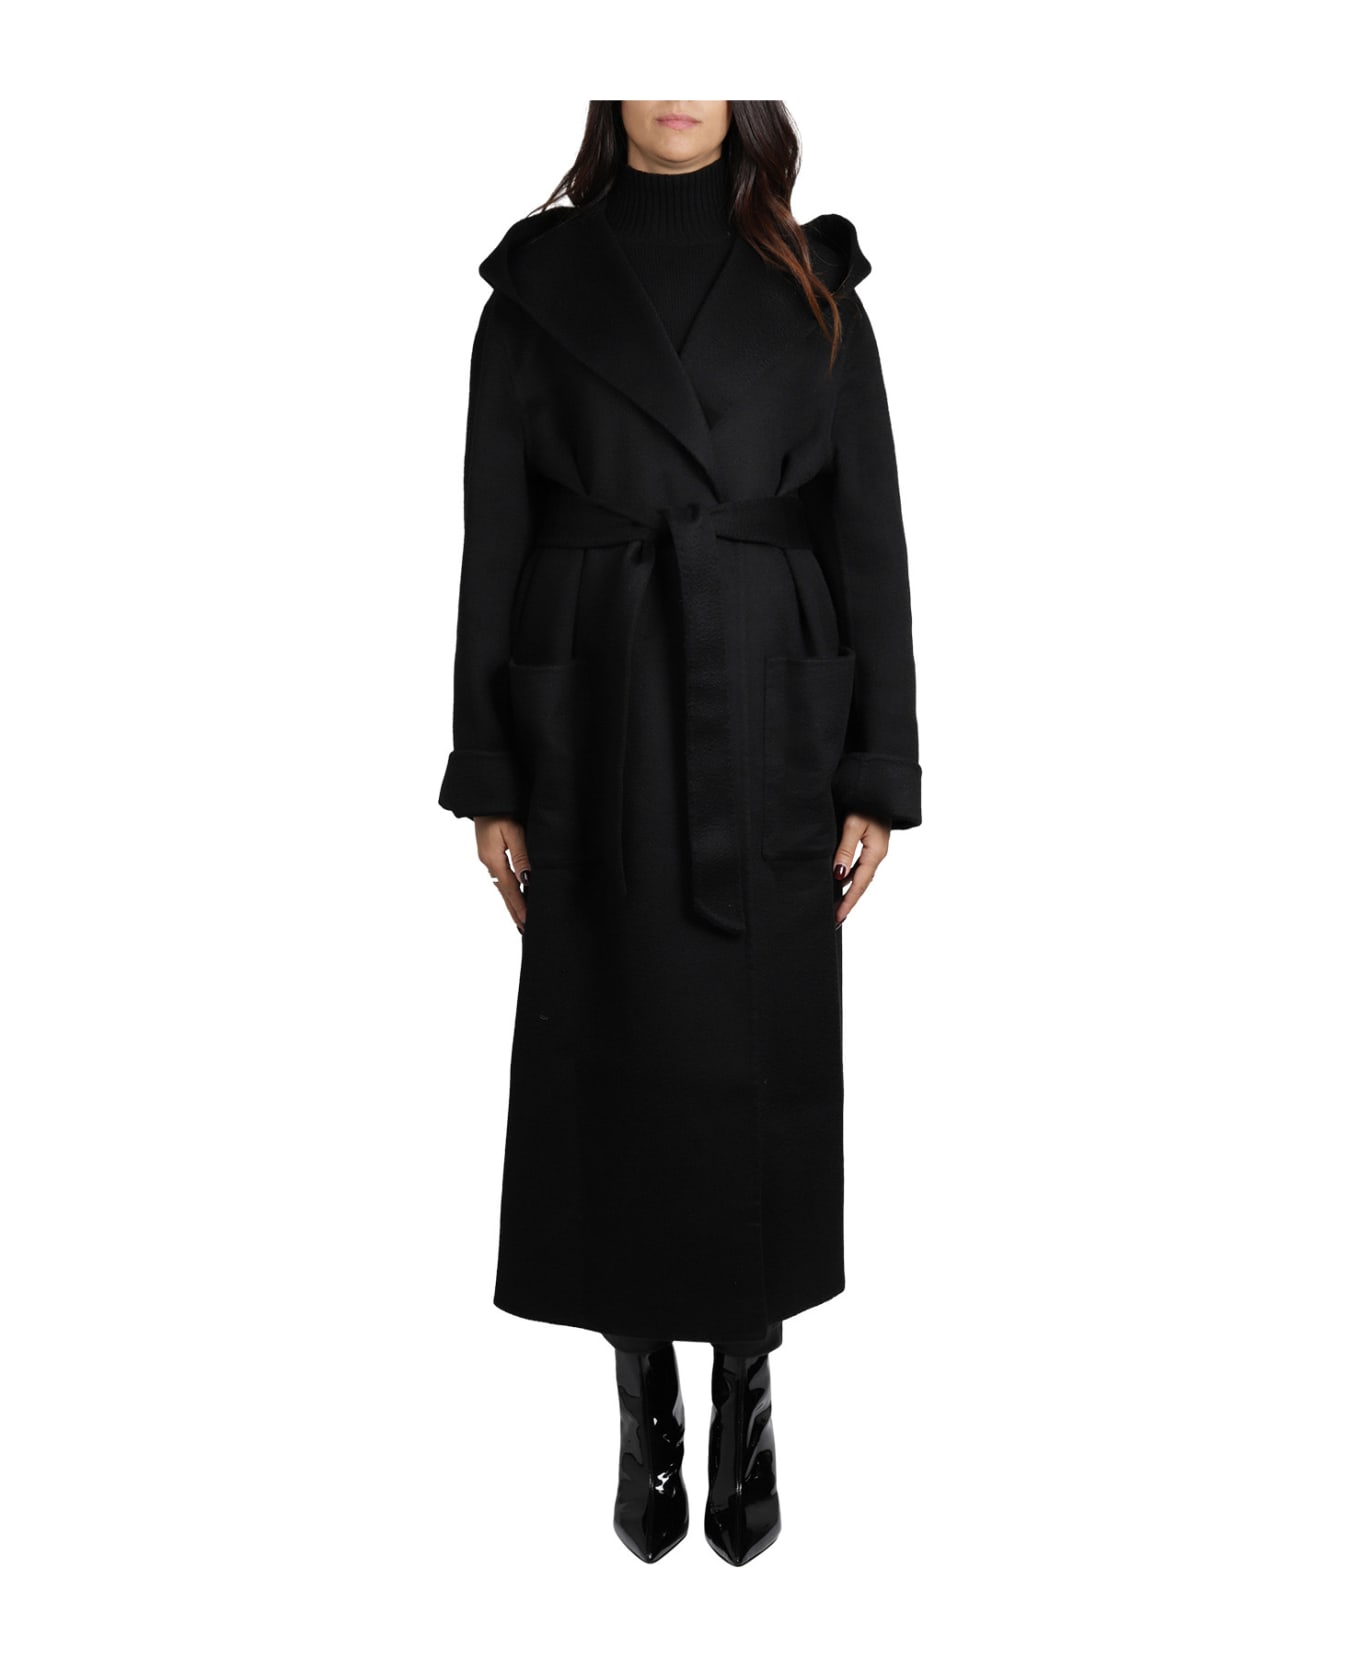 Sorelle Secli Black Long Coat | italist, ALWAYS LIKE A SALE